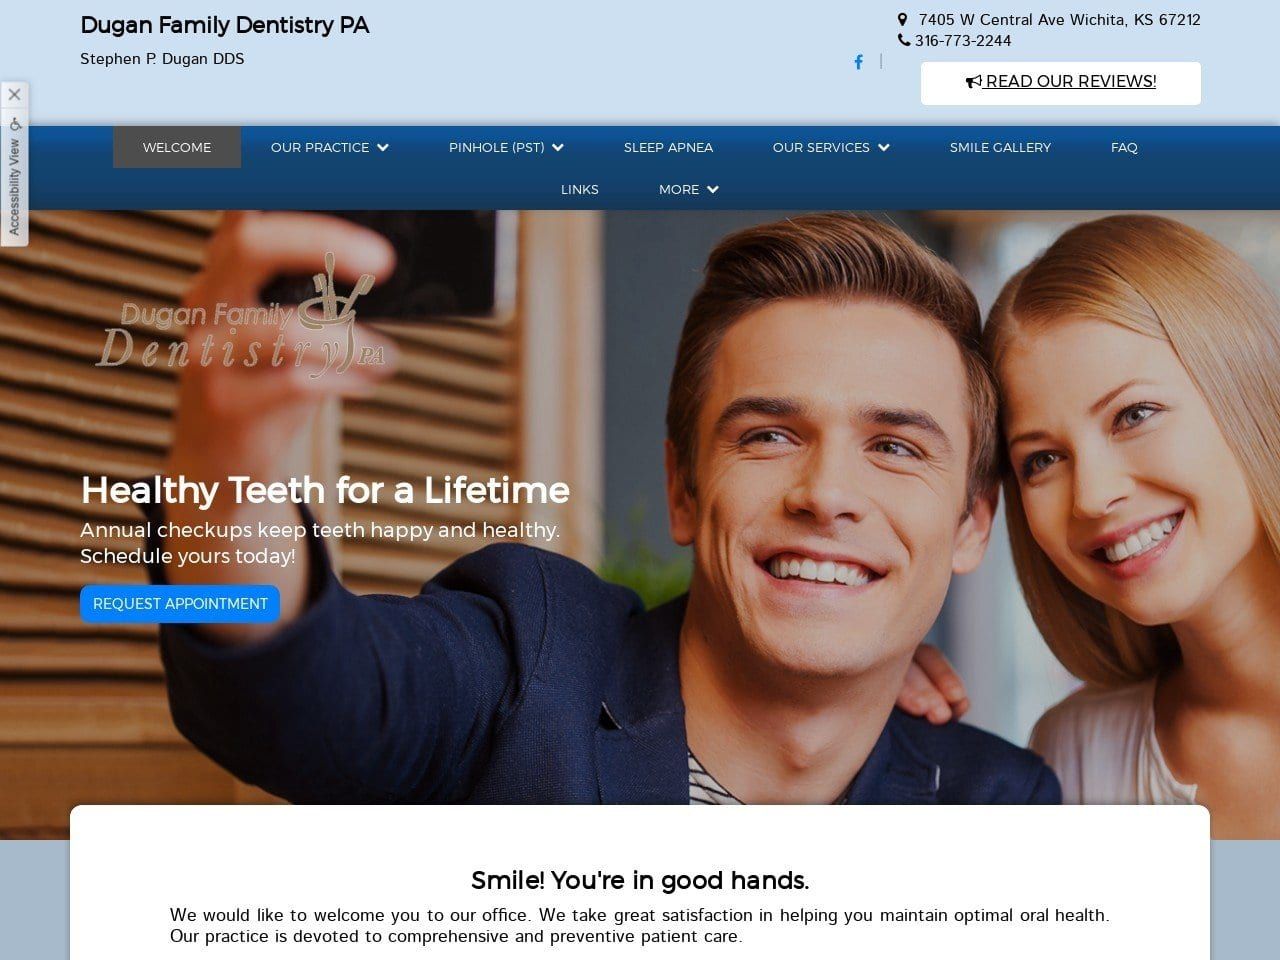 Dugan Family Dentist Website Screenshot from duganfamilydentistry.com